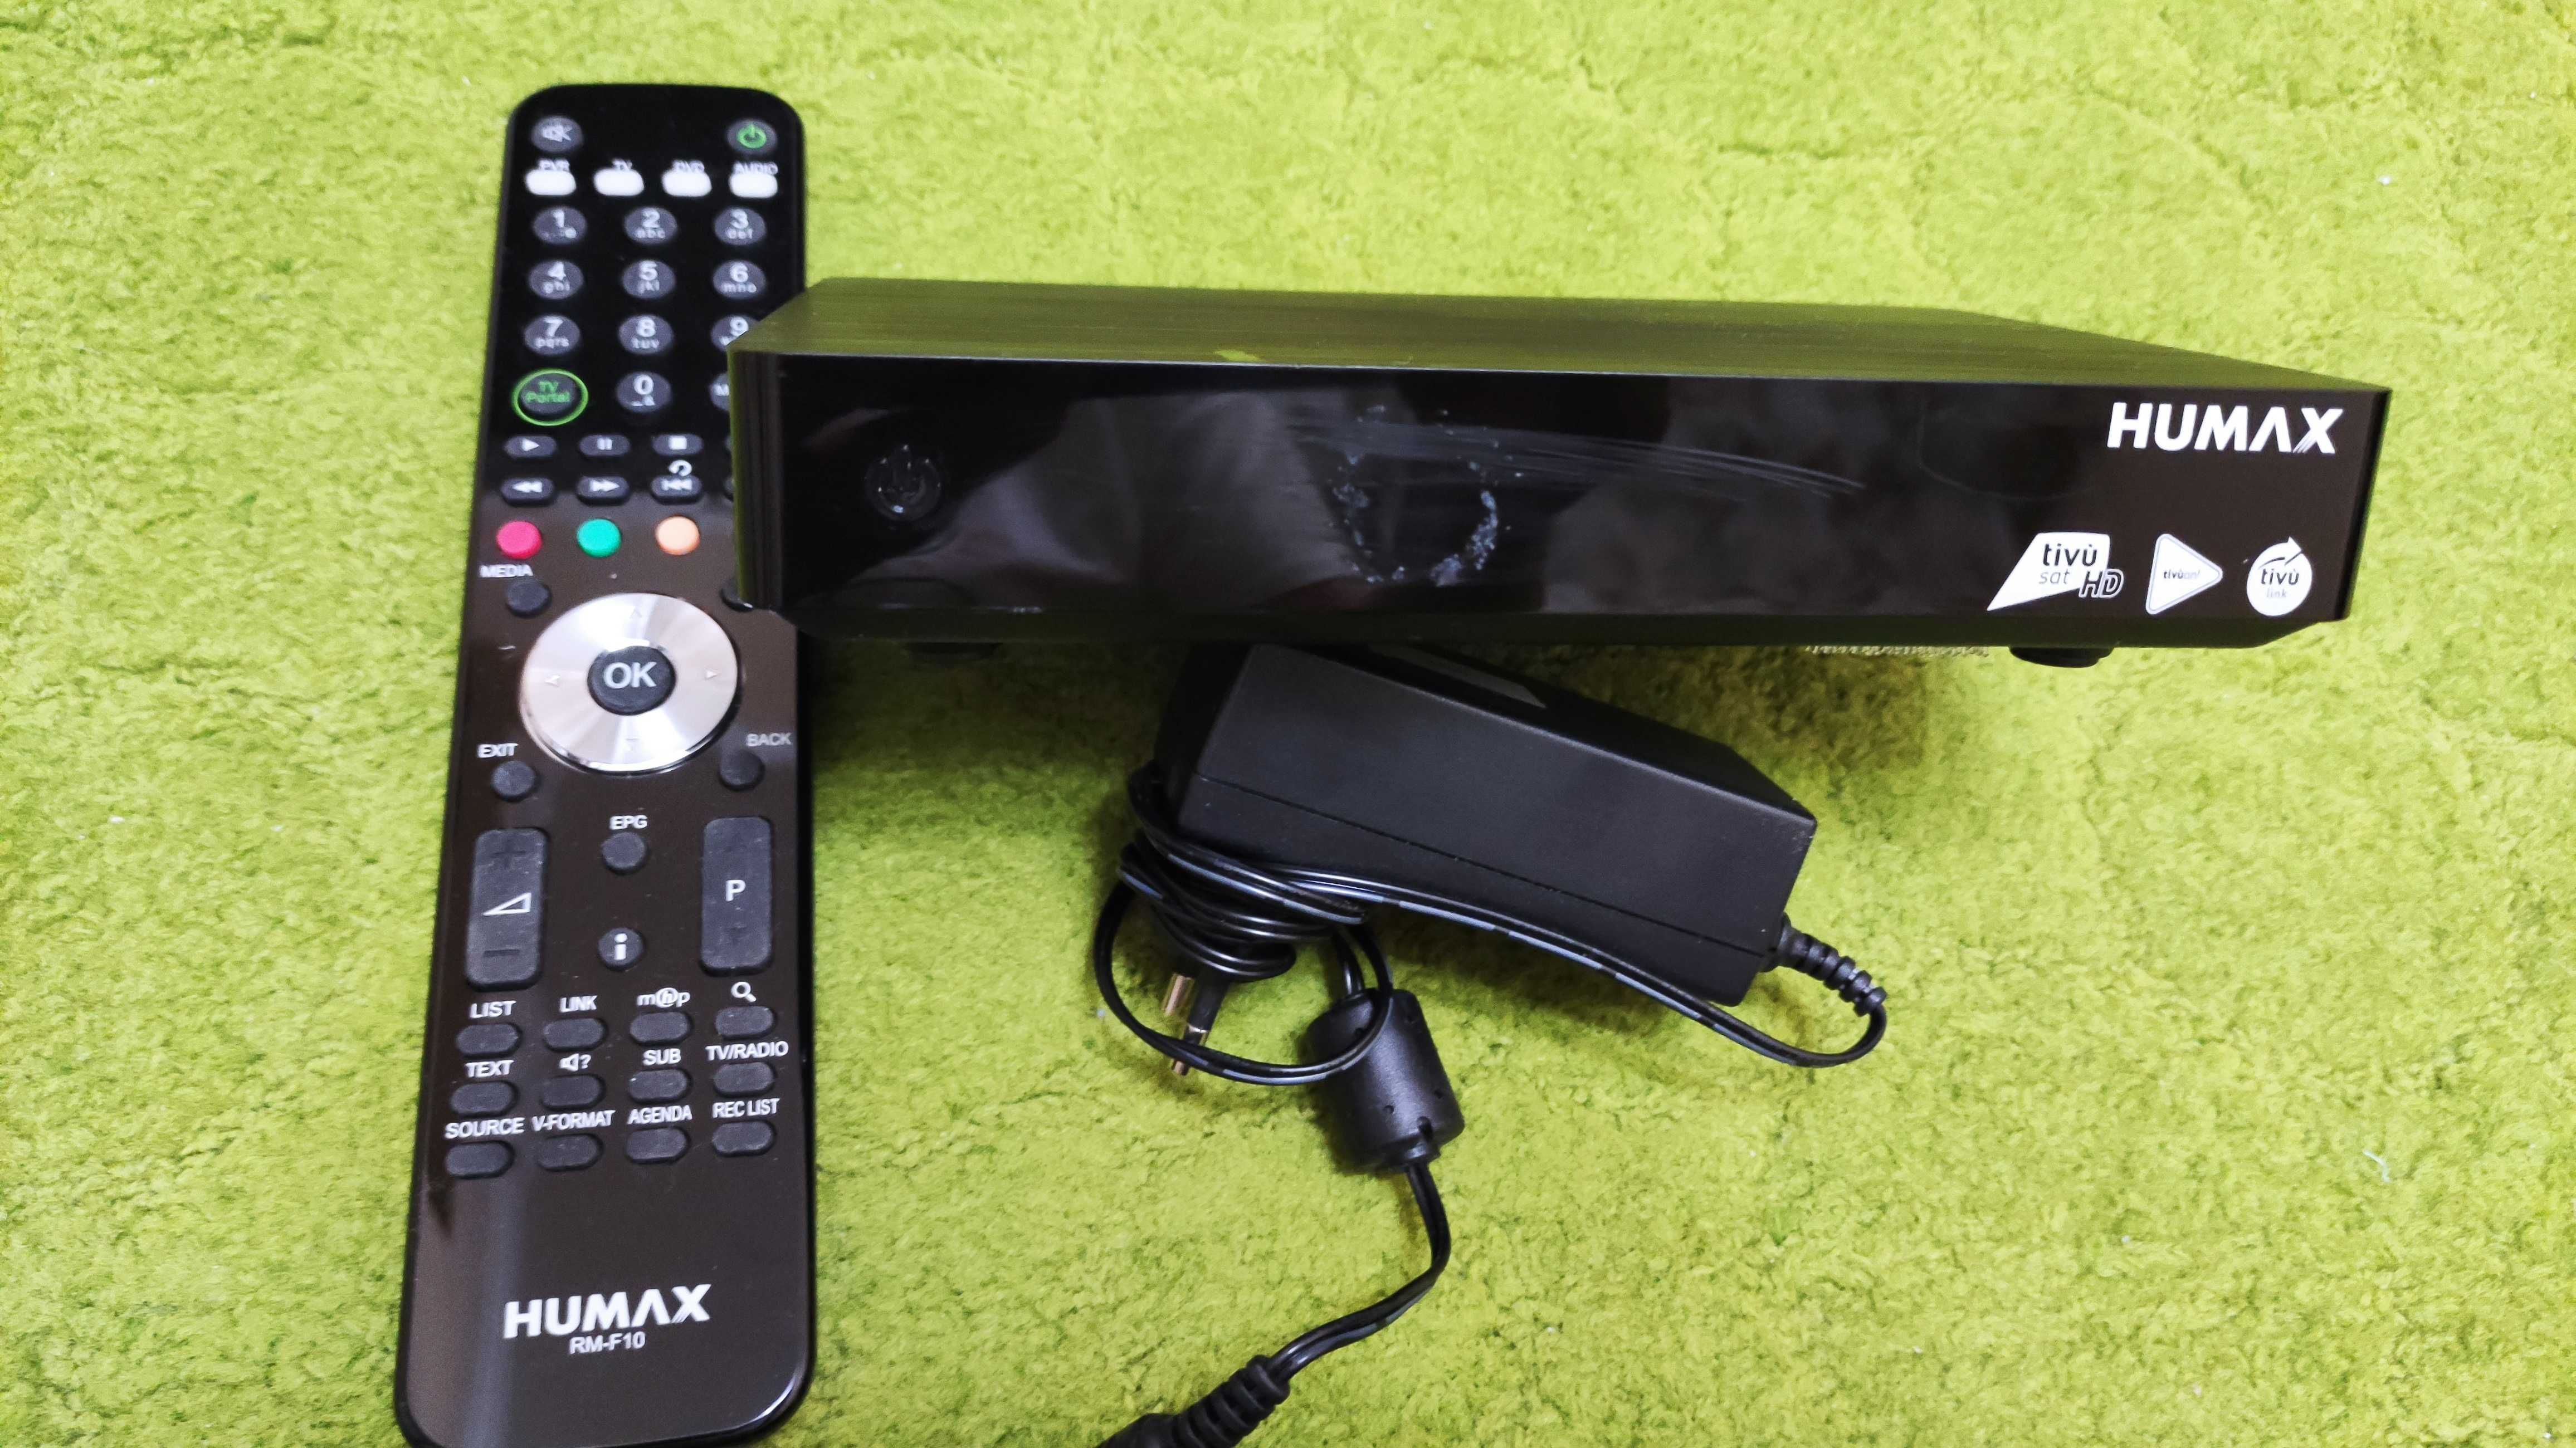 Humax Tivumax Pro HD-6800s Tivu Sat HDTV ресивер + карта